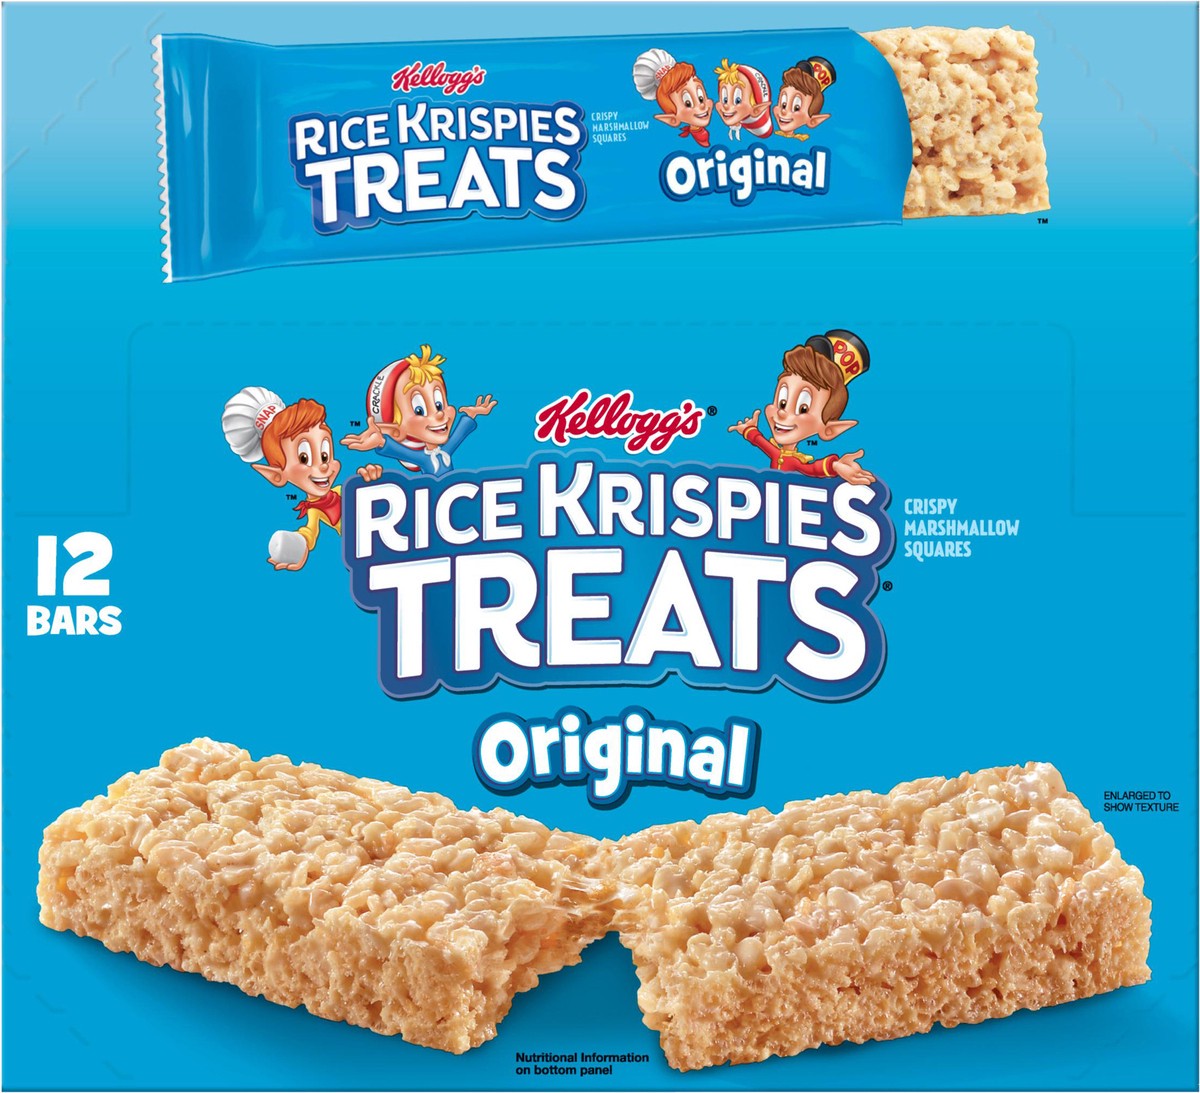 slide 6 of 9, Rice Krispies Treats Original Crispy Marshmallow Squares, 26.4 oz